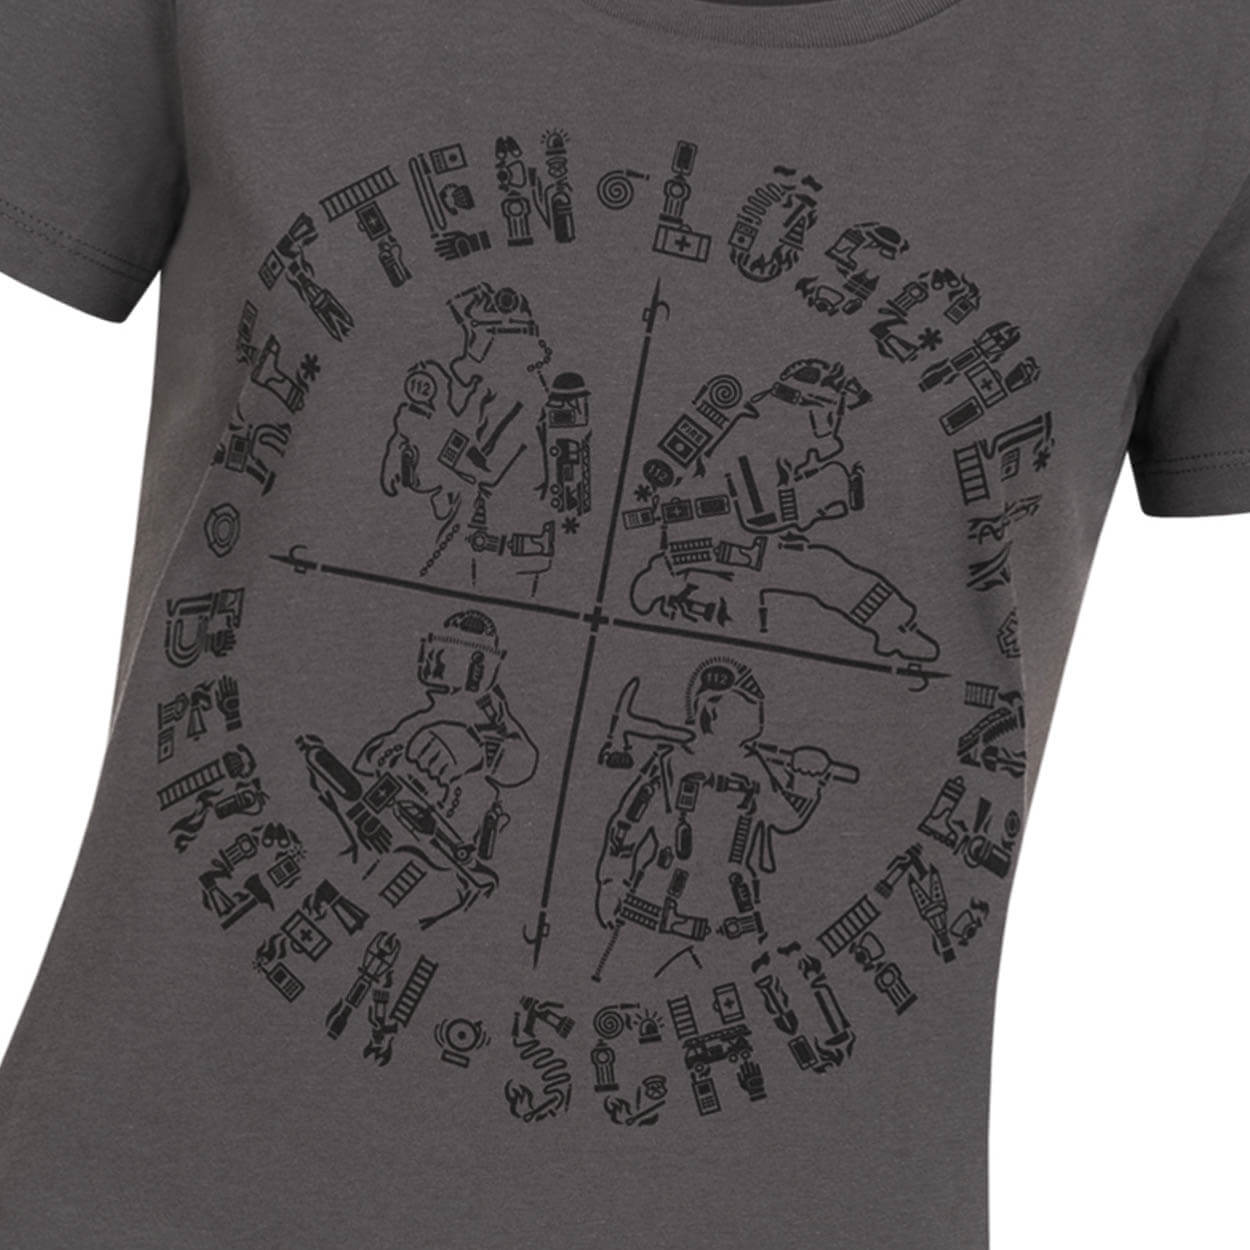 Retten Löschen Bergen Schützen - Design Frauen T-Shirt Anthracite